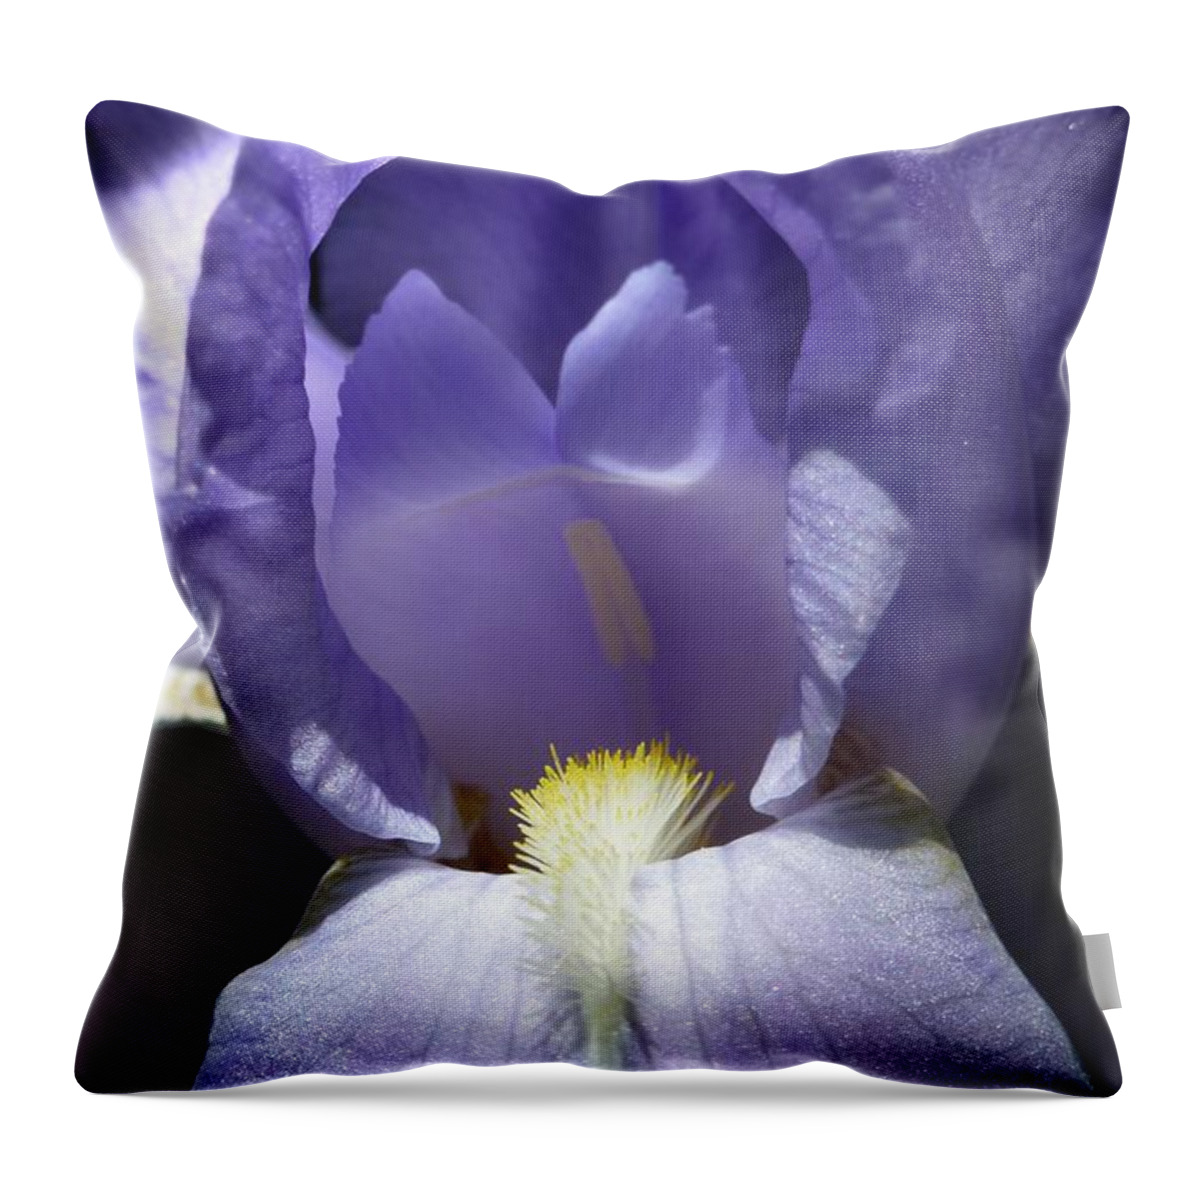 Beautiful Throw Pillow featuring the photograph Iris 2 by Jean Bernard Roussilhe